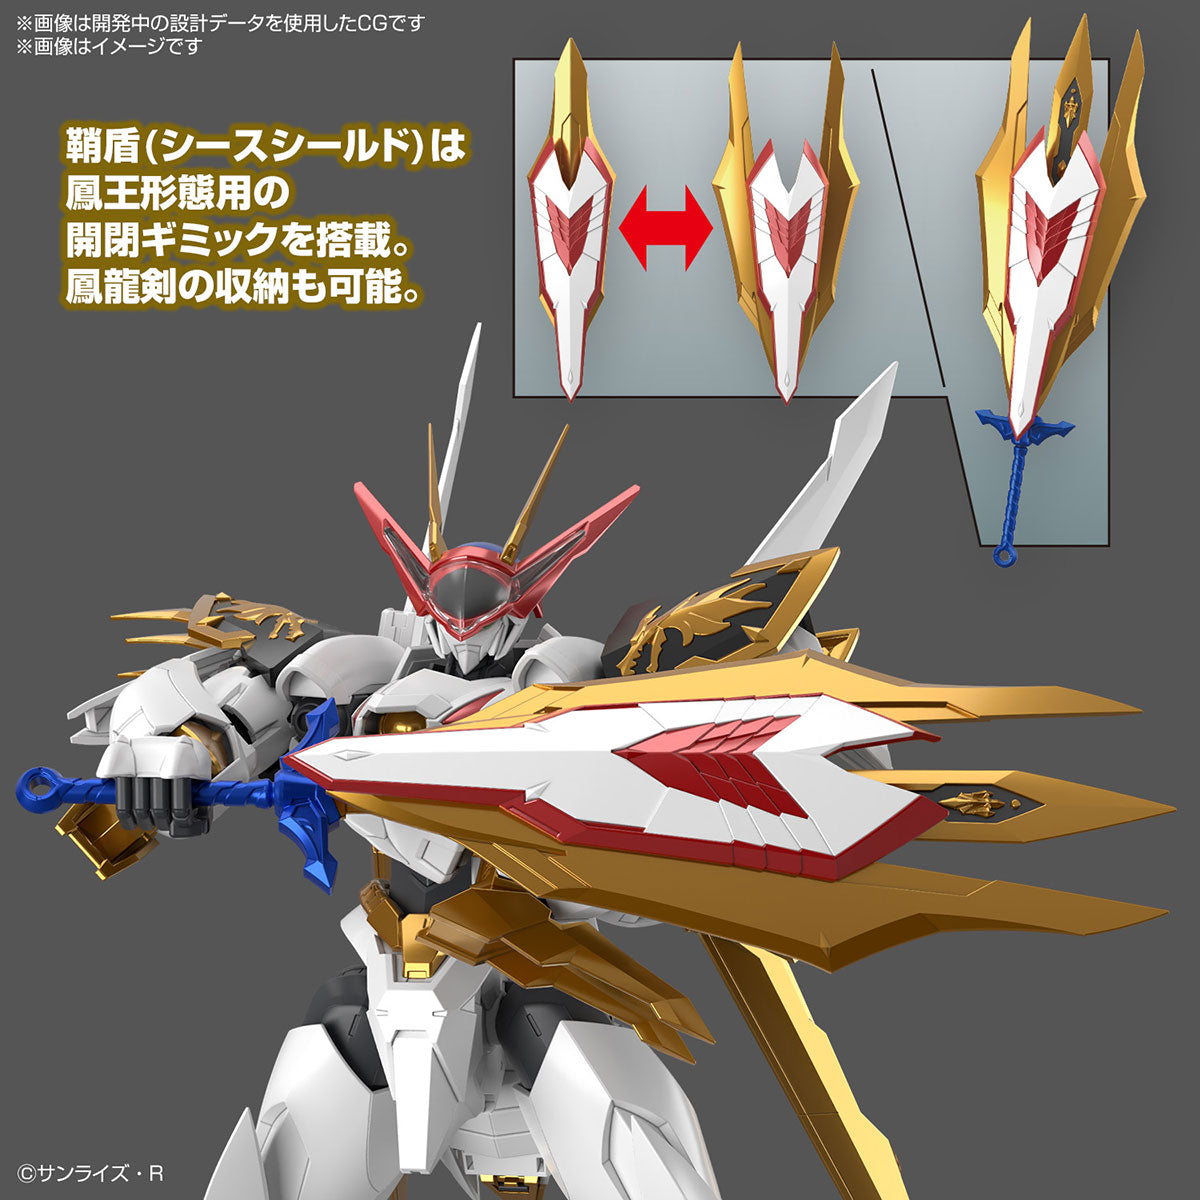 Bandai High Grade HG Amplified IMGN Ryuoumaru Plastic Model Action Toy VCA Gundam Singapore